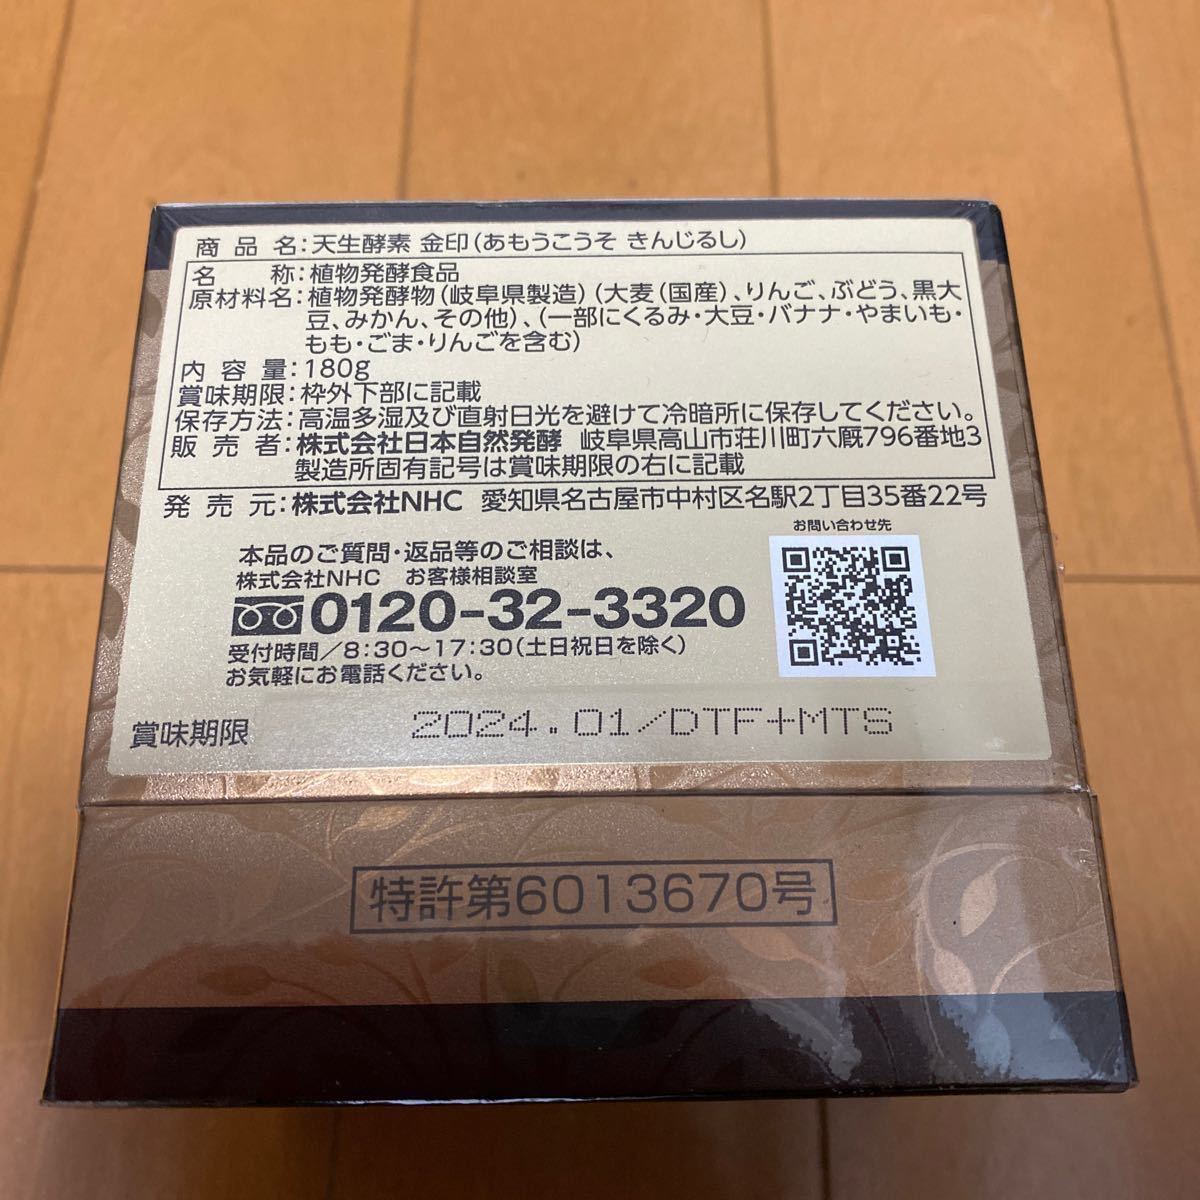 Sản phẩm 日本自然発酵 天生酵素 金印 （180g×1箱）nhc 健康食品 新品